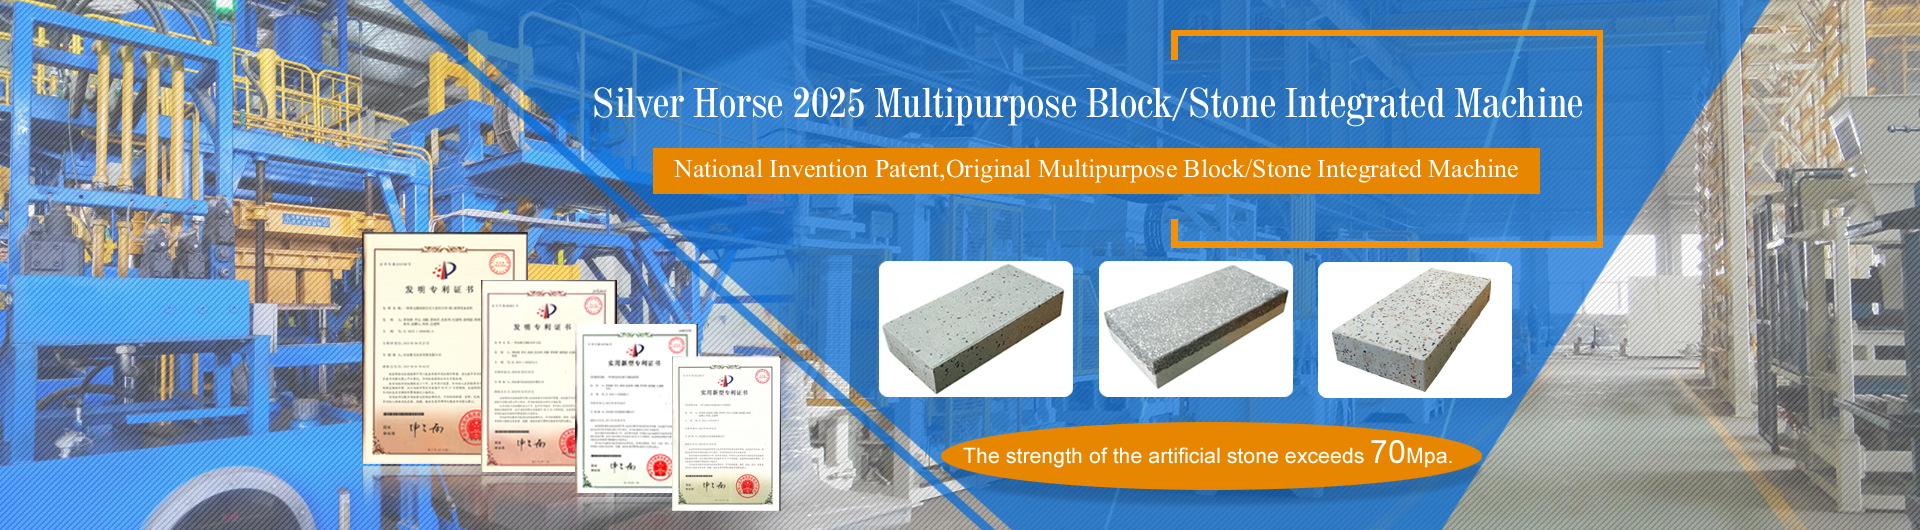 Silver Horse 2025 multipurpose block/stone integrated machine